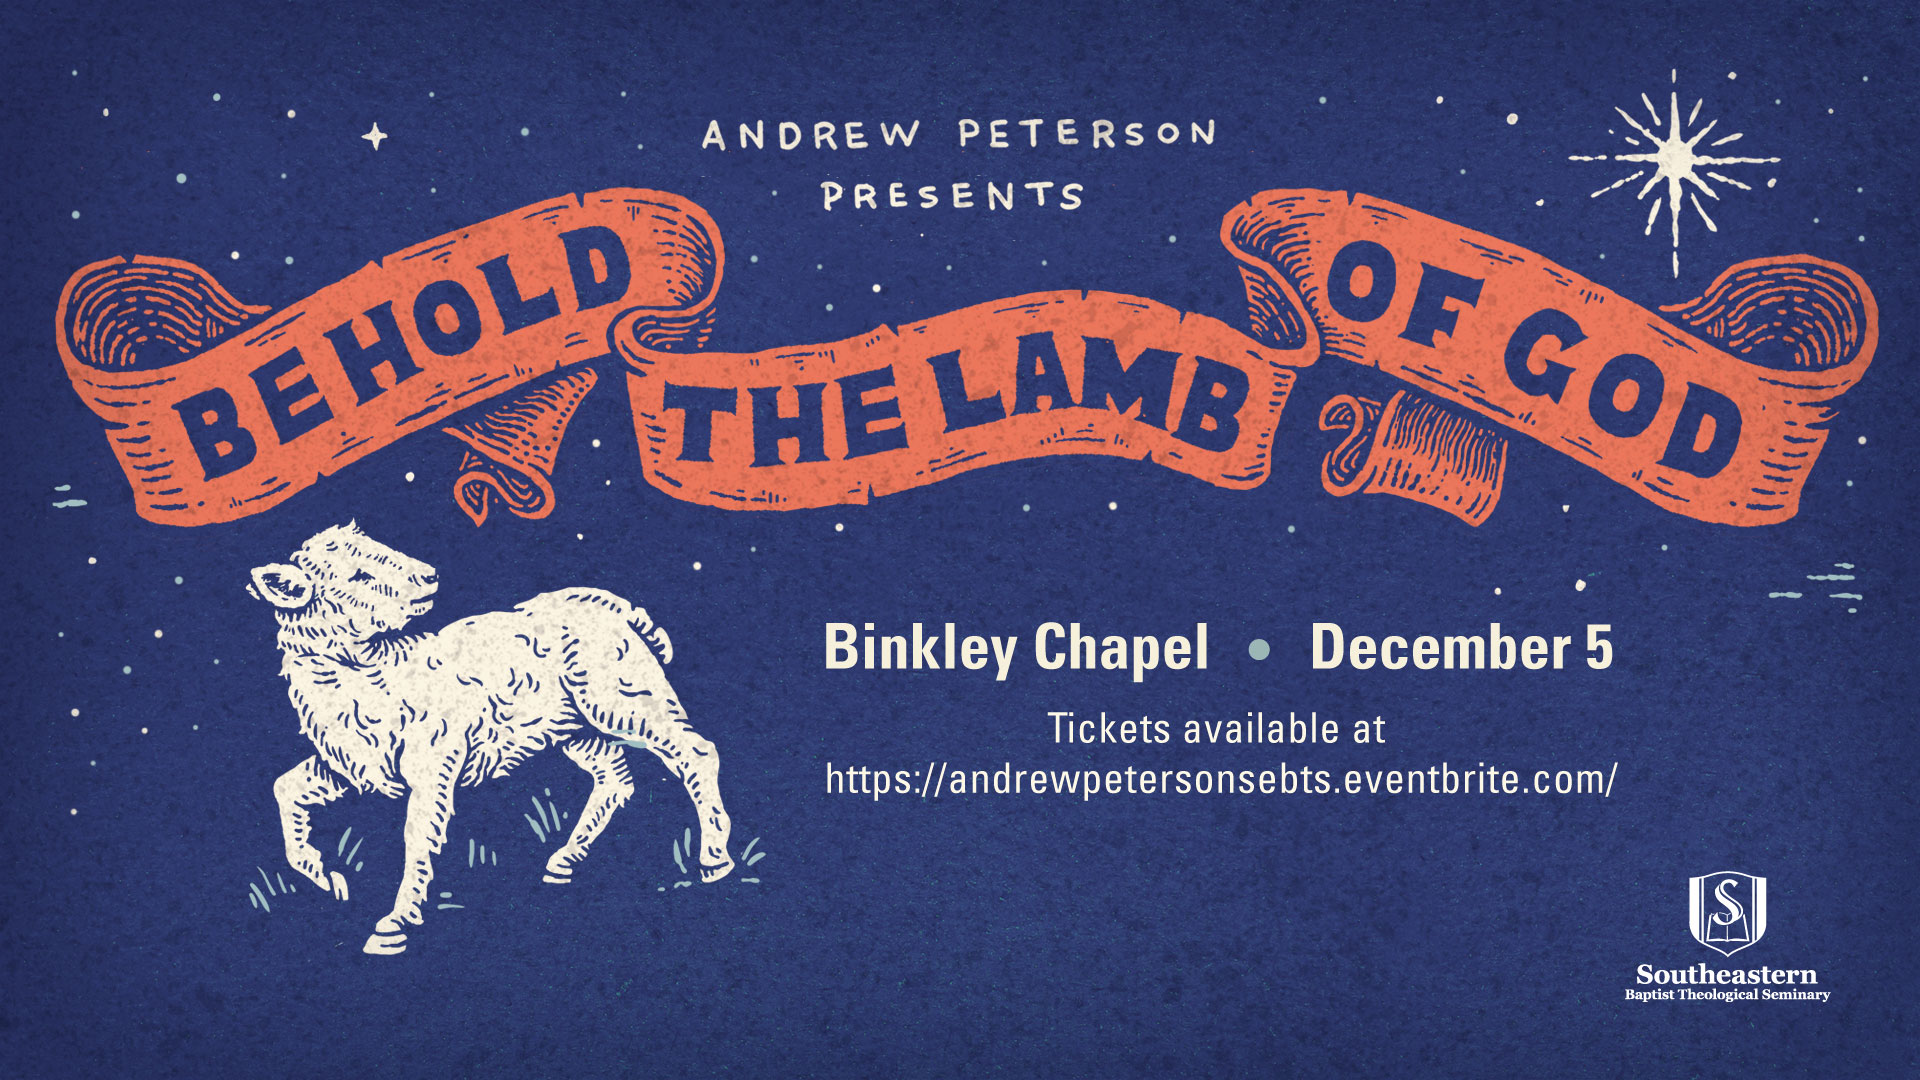 behold lamb of god tour